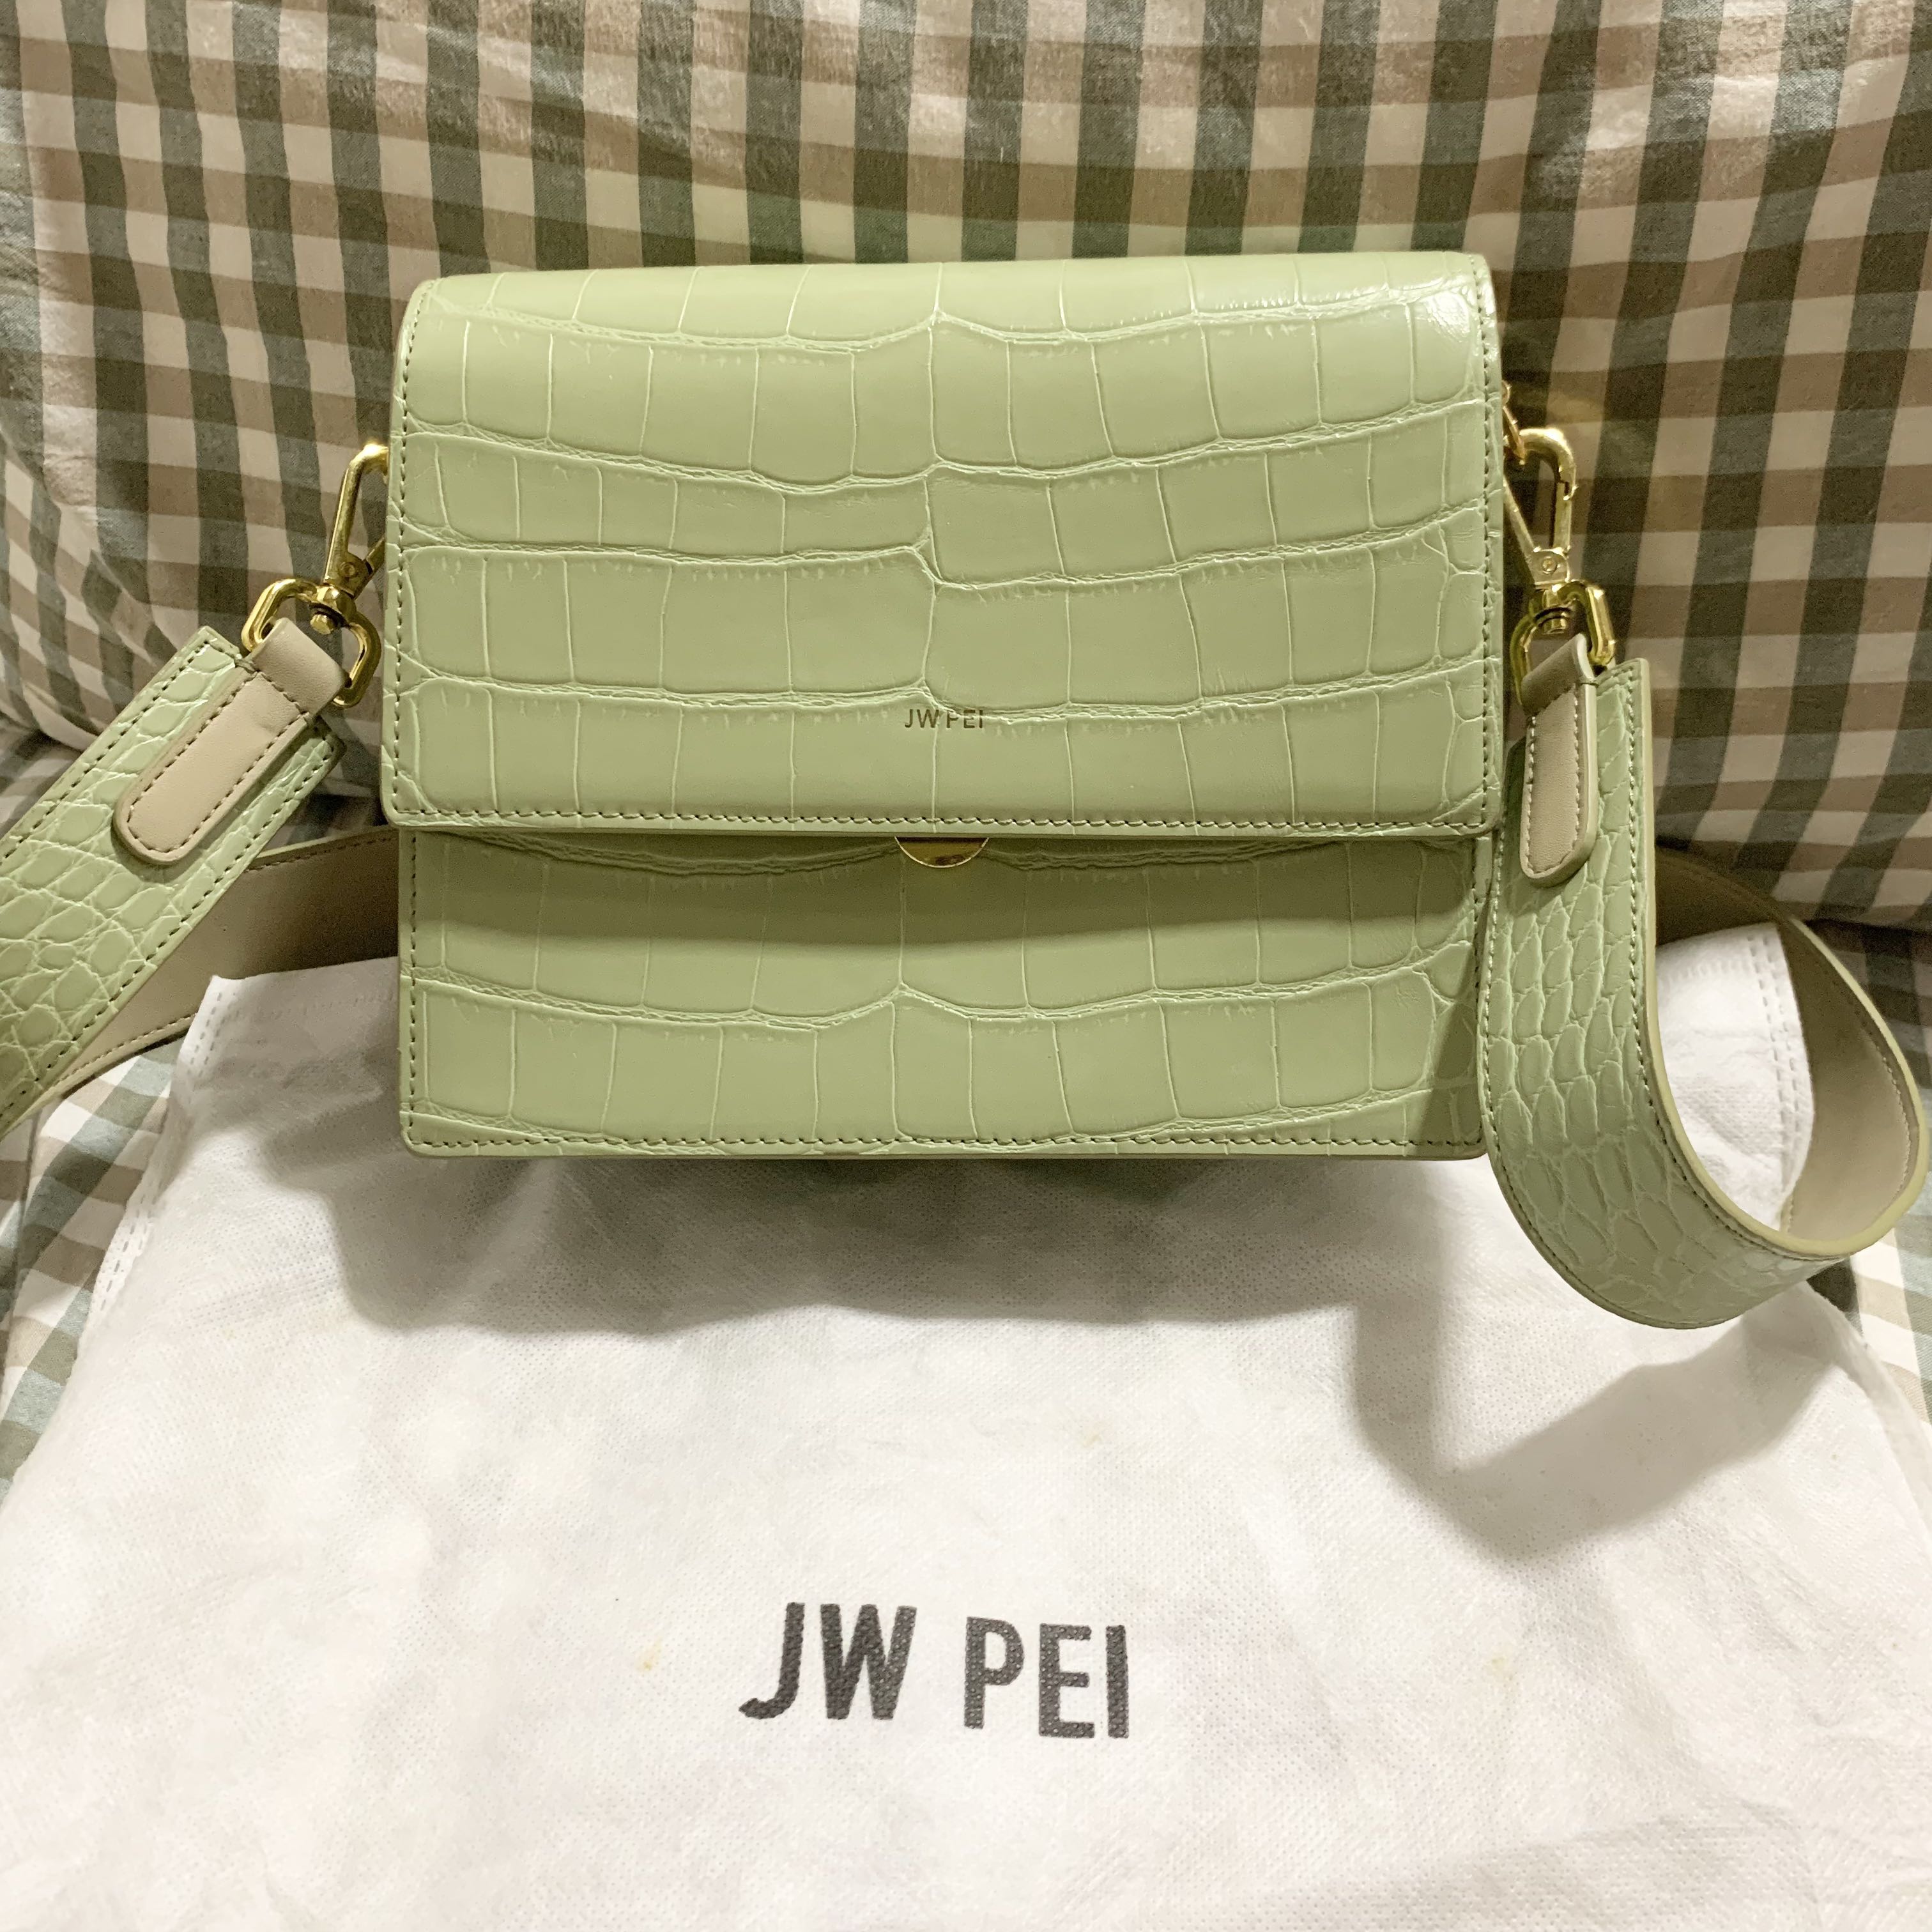 JW PEI Mini Flap Bag - Sage Green Croc, Women's Fashion, Bags